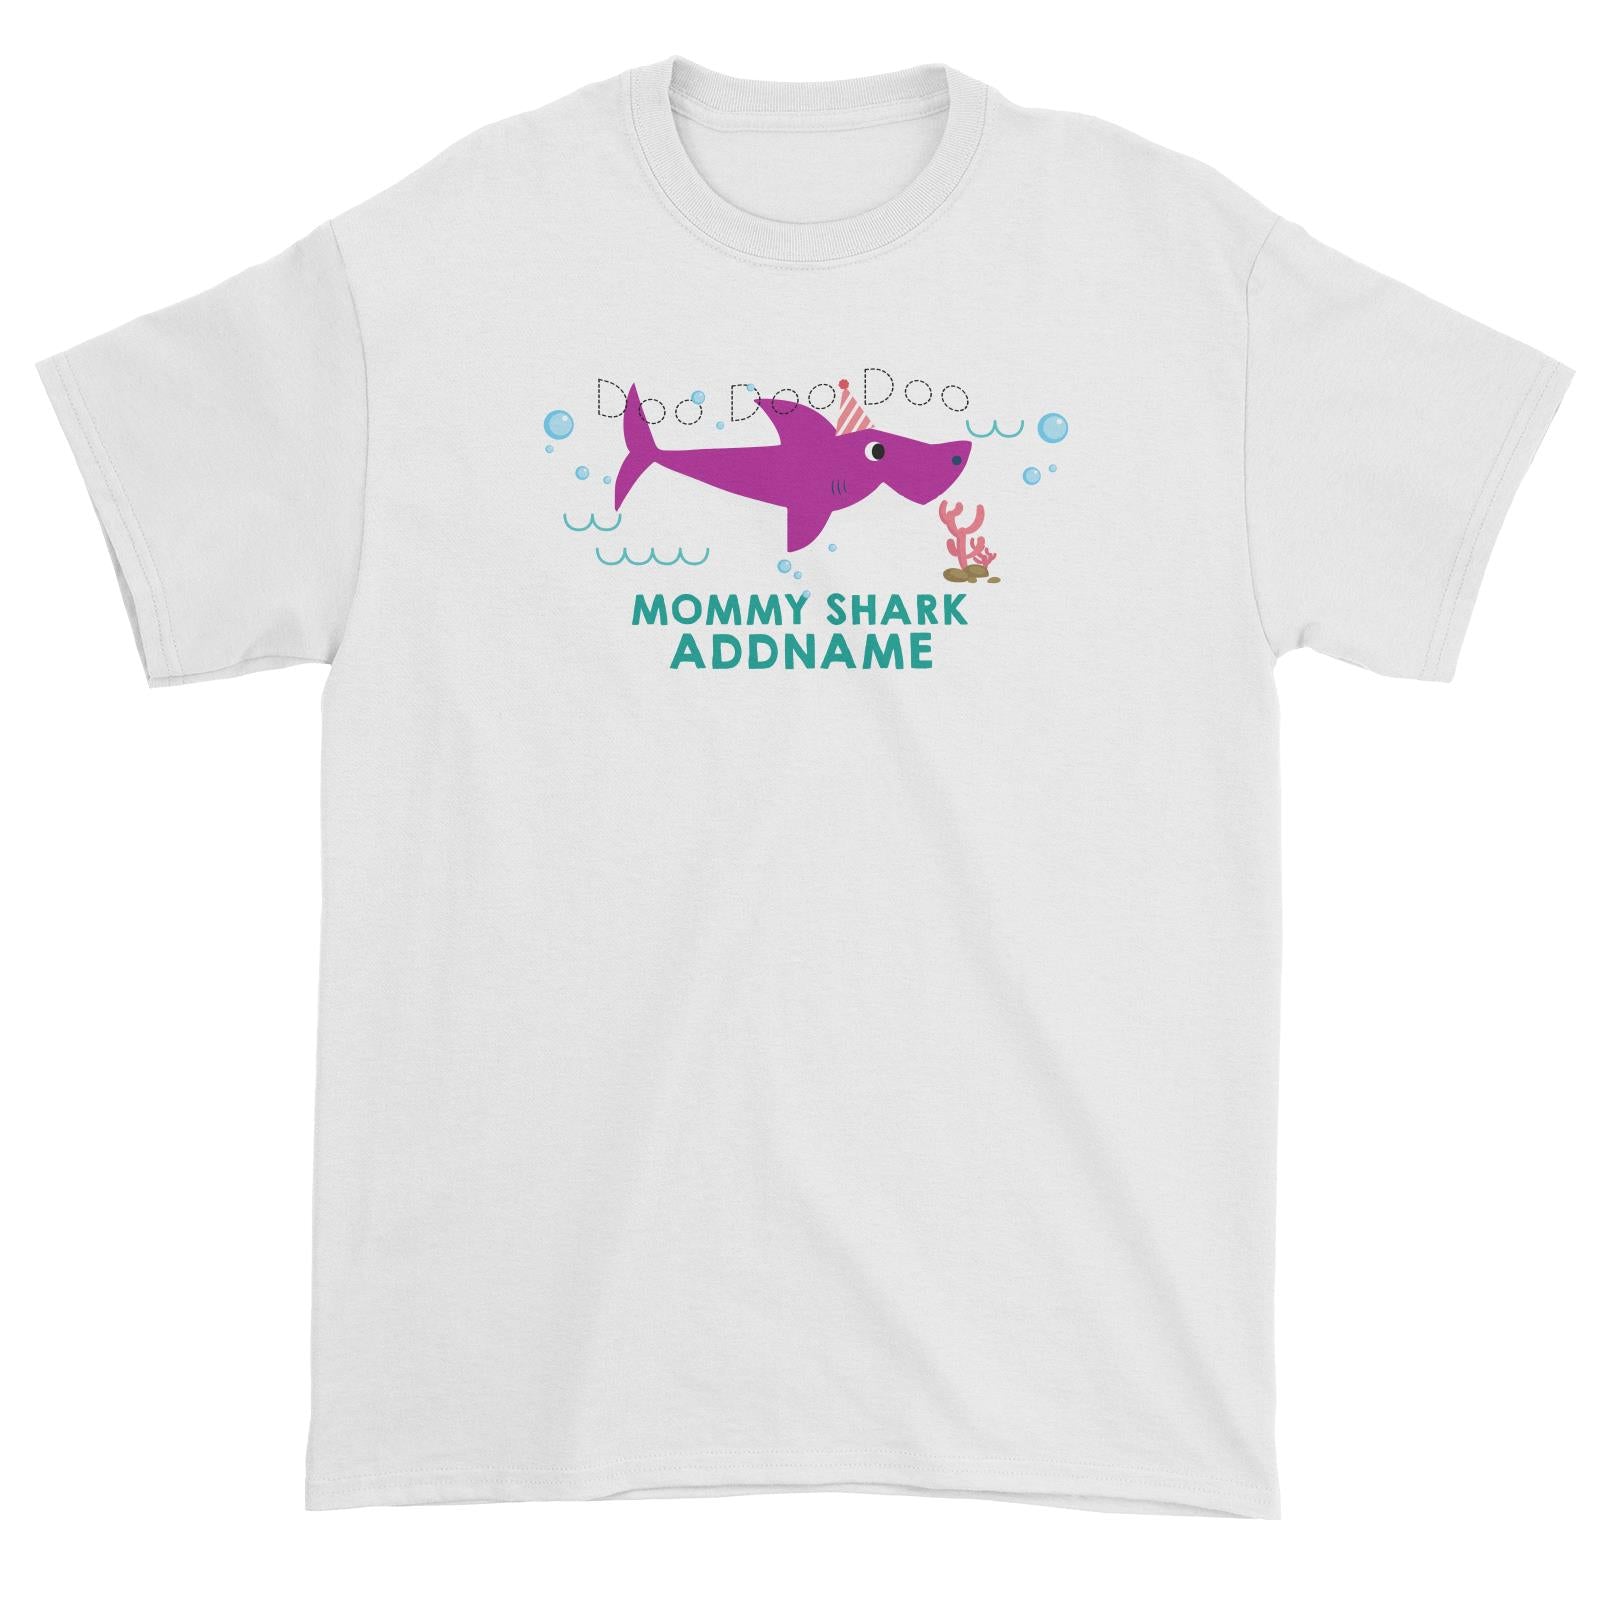 Mommy Shark Birthday Theme Addname Unisex T-Shirt